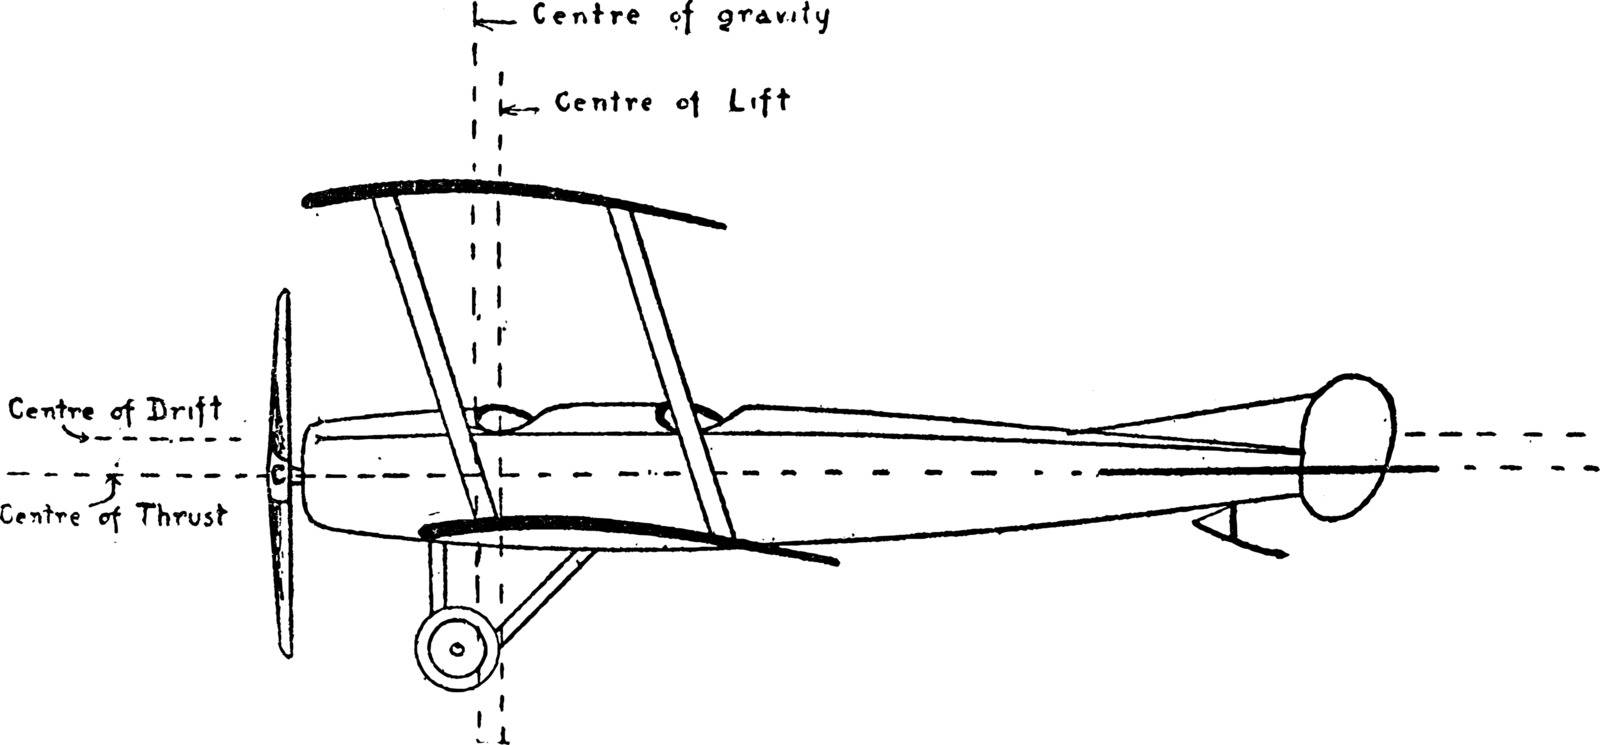 Centre of Gravity Lift Drift Thrust of Aeroplane, vintage illust by Morphart